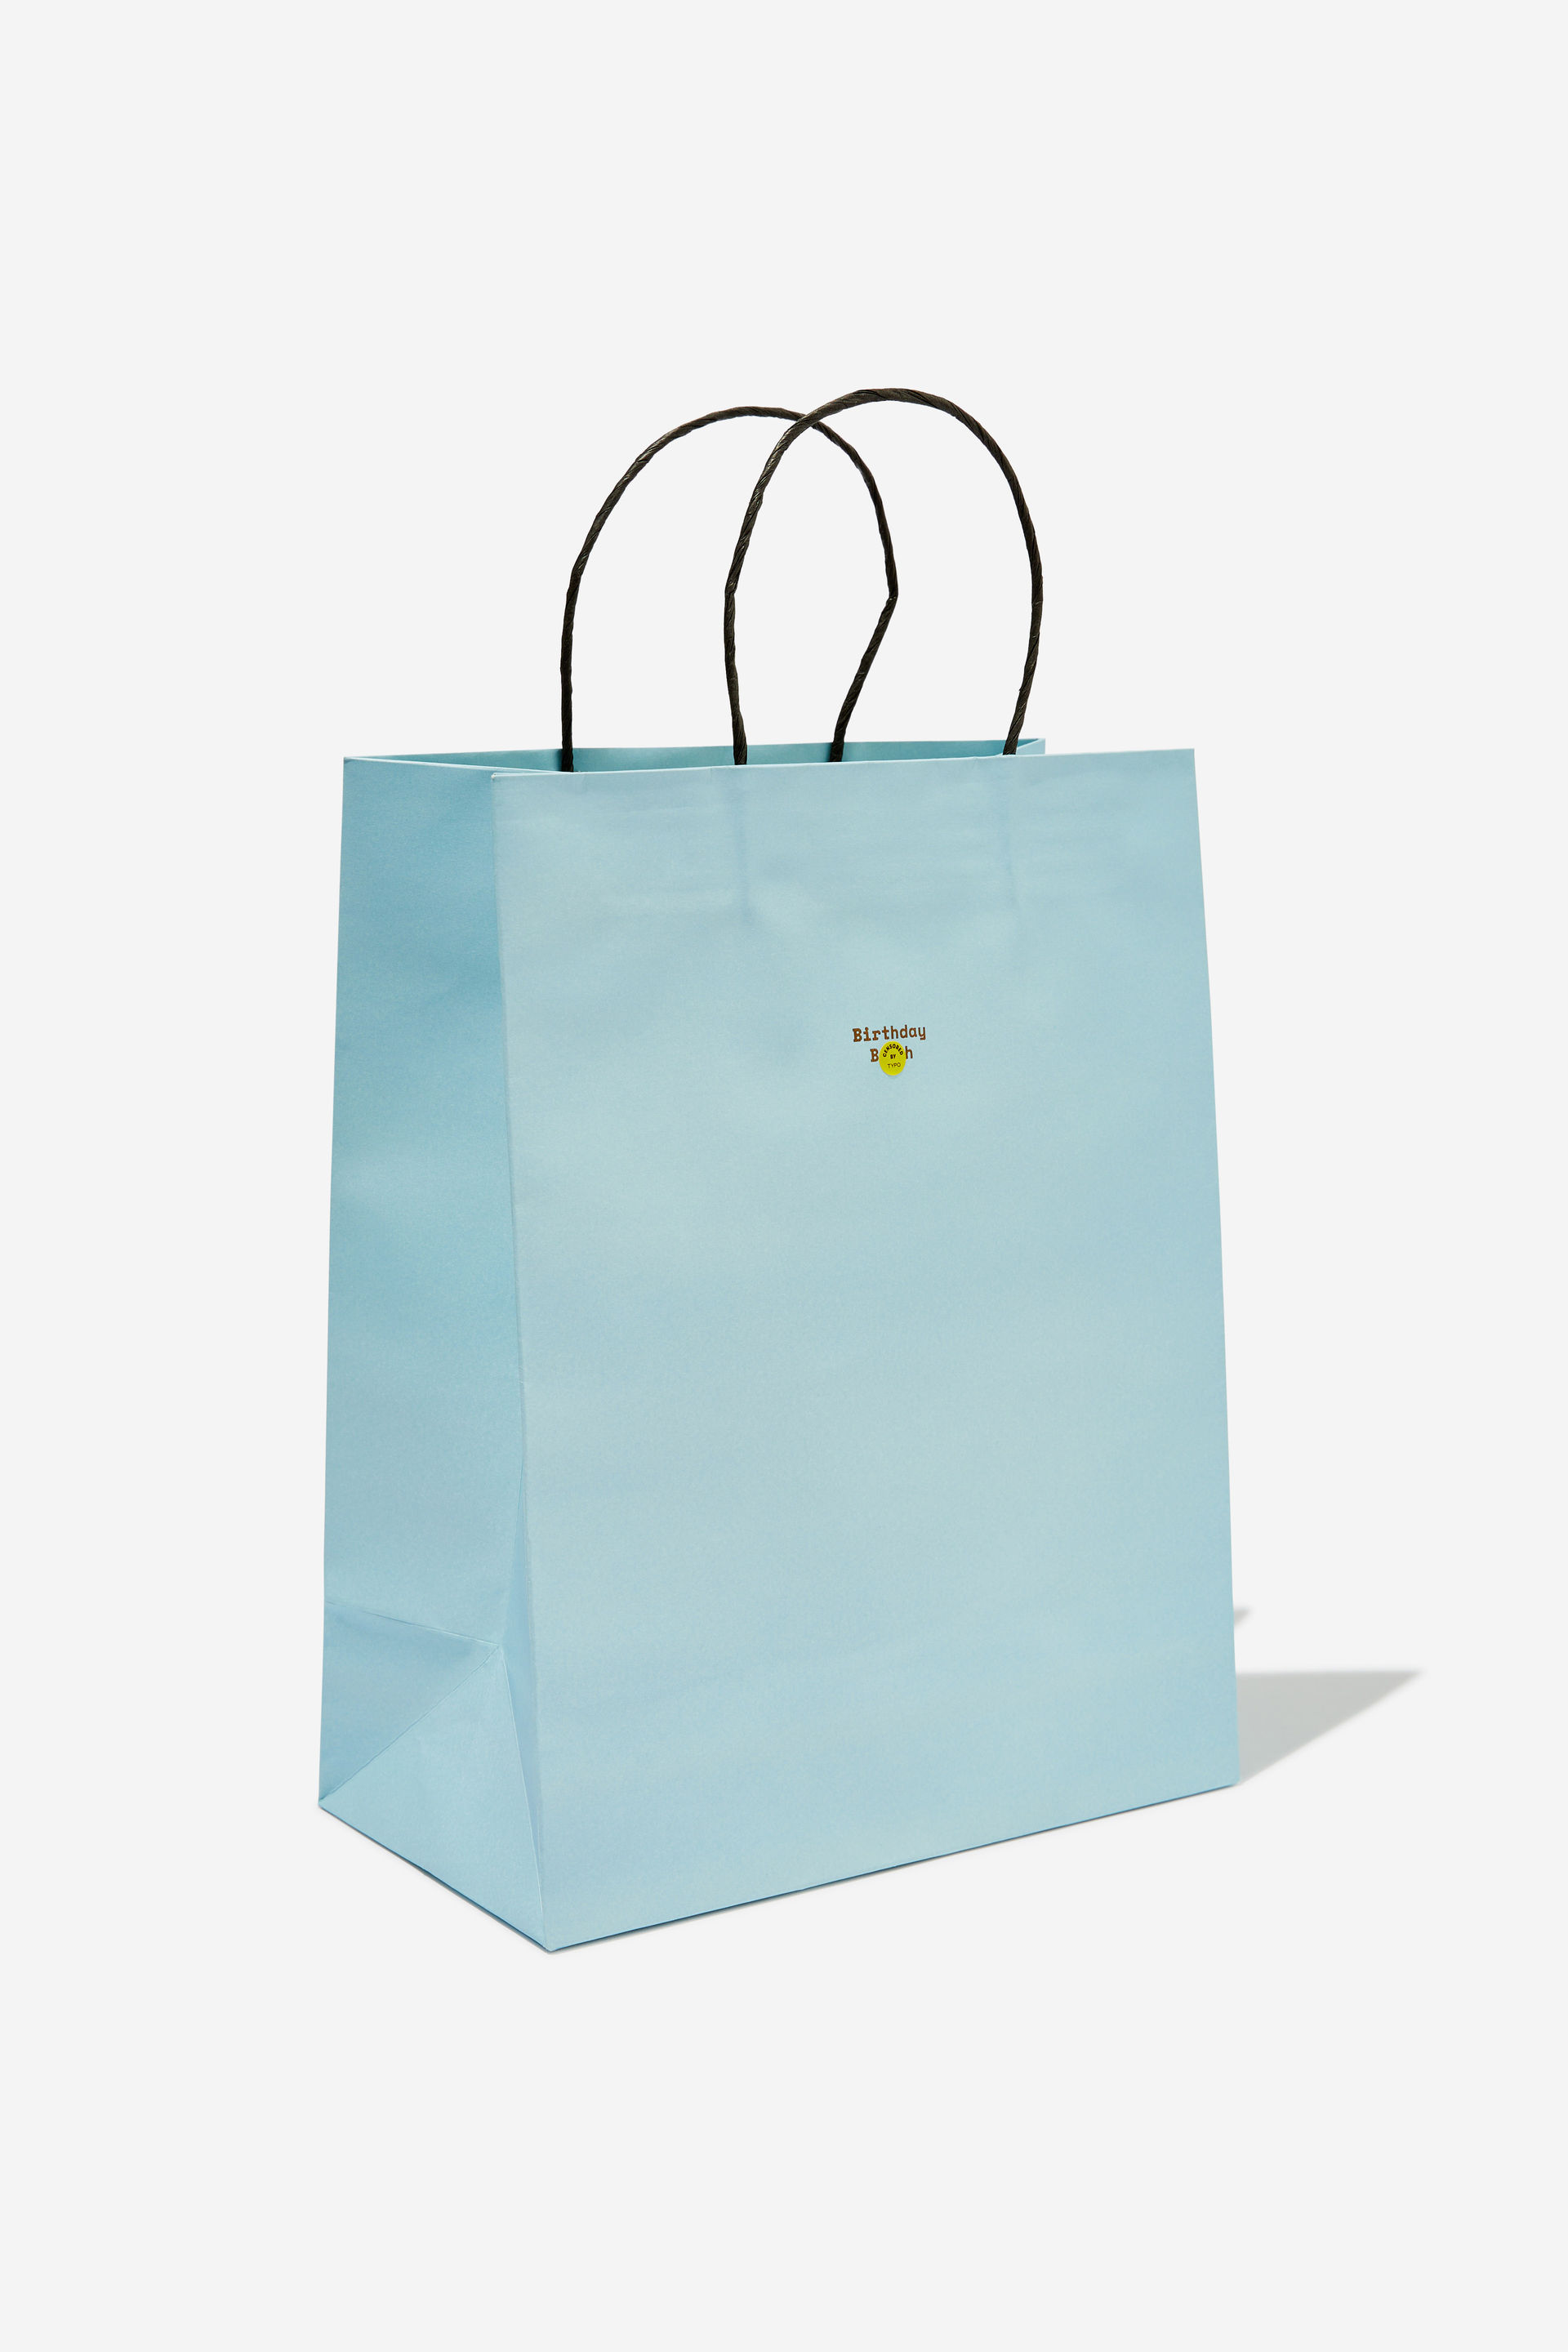 Typo - Get Stuffed Gift Bag - Medium - Birthday bitch gold foil arctic blue!